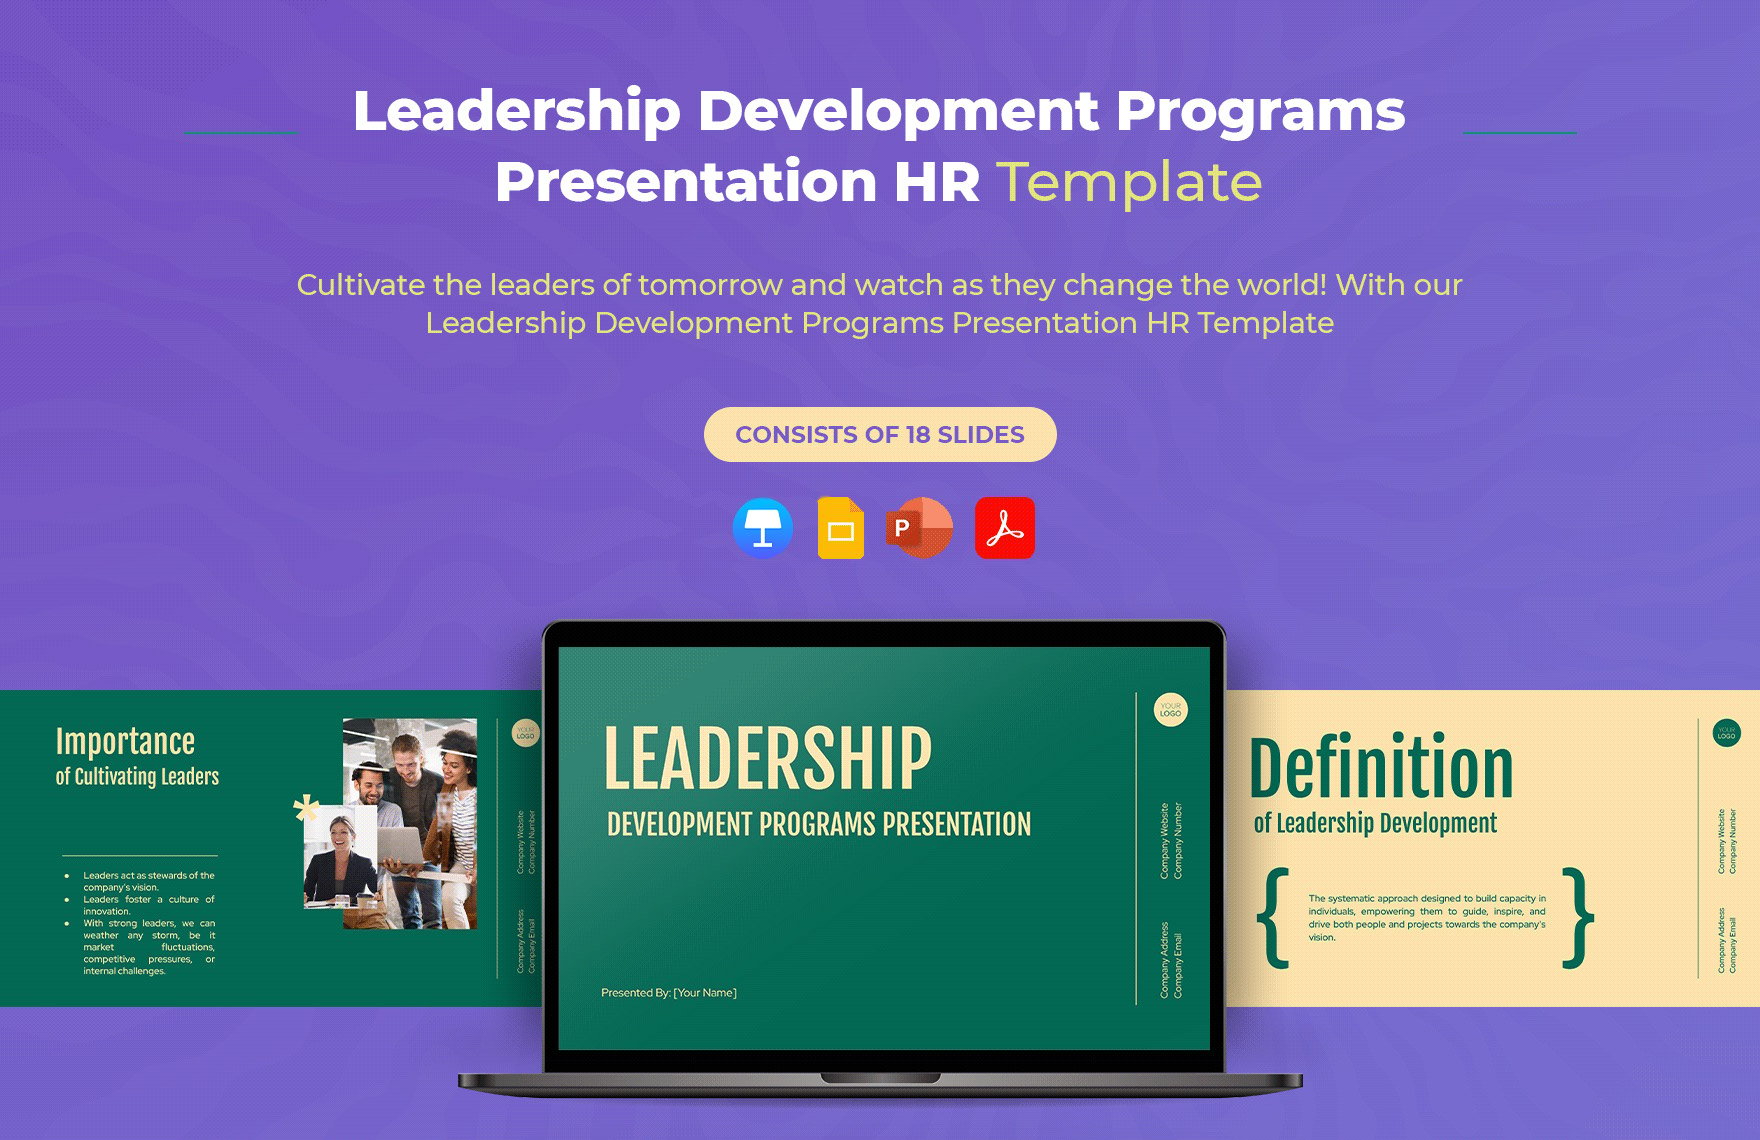 Leadership Development Programs Presentation HR Template